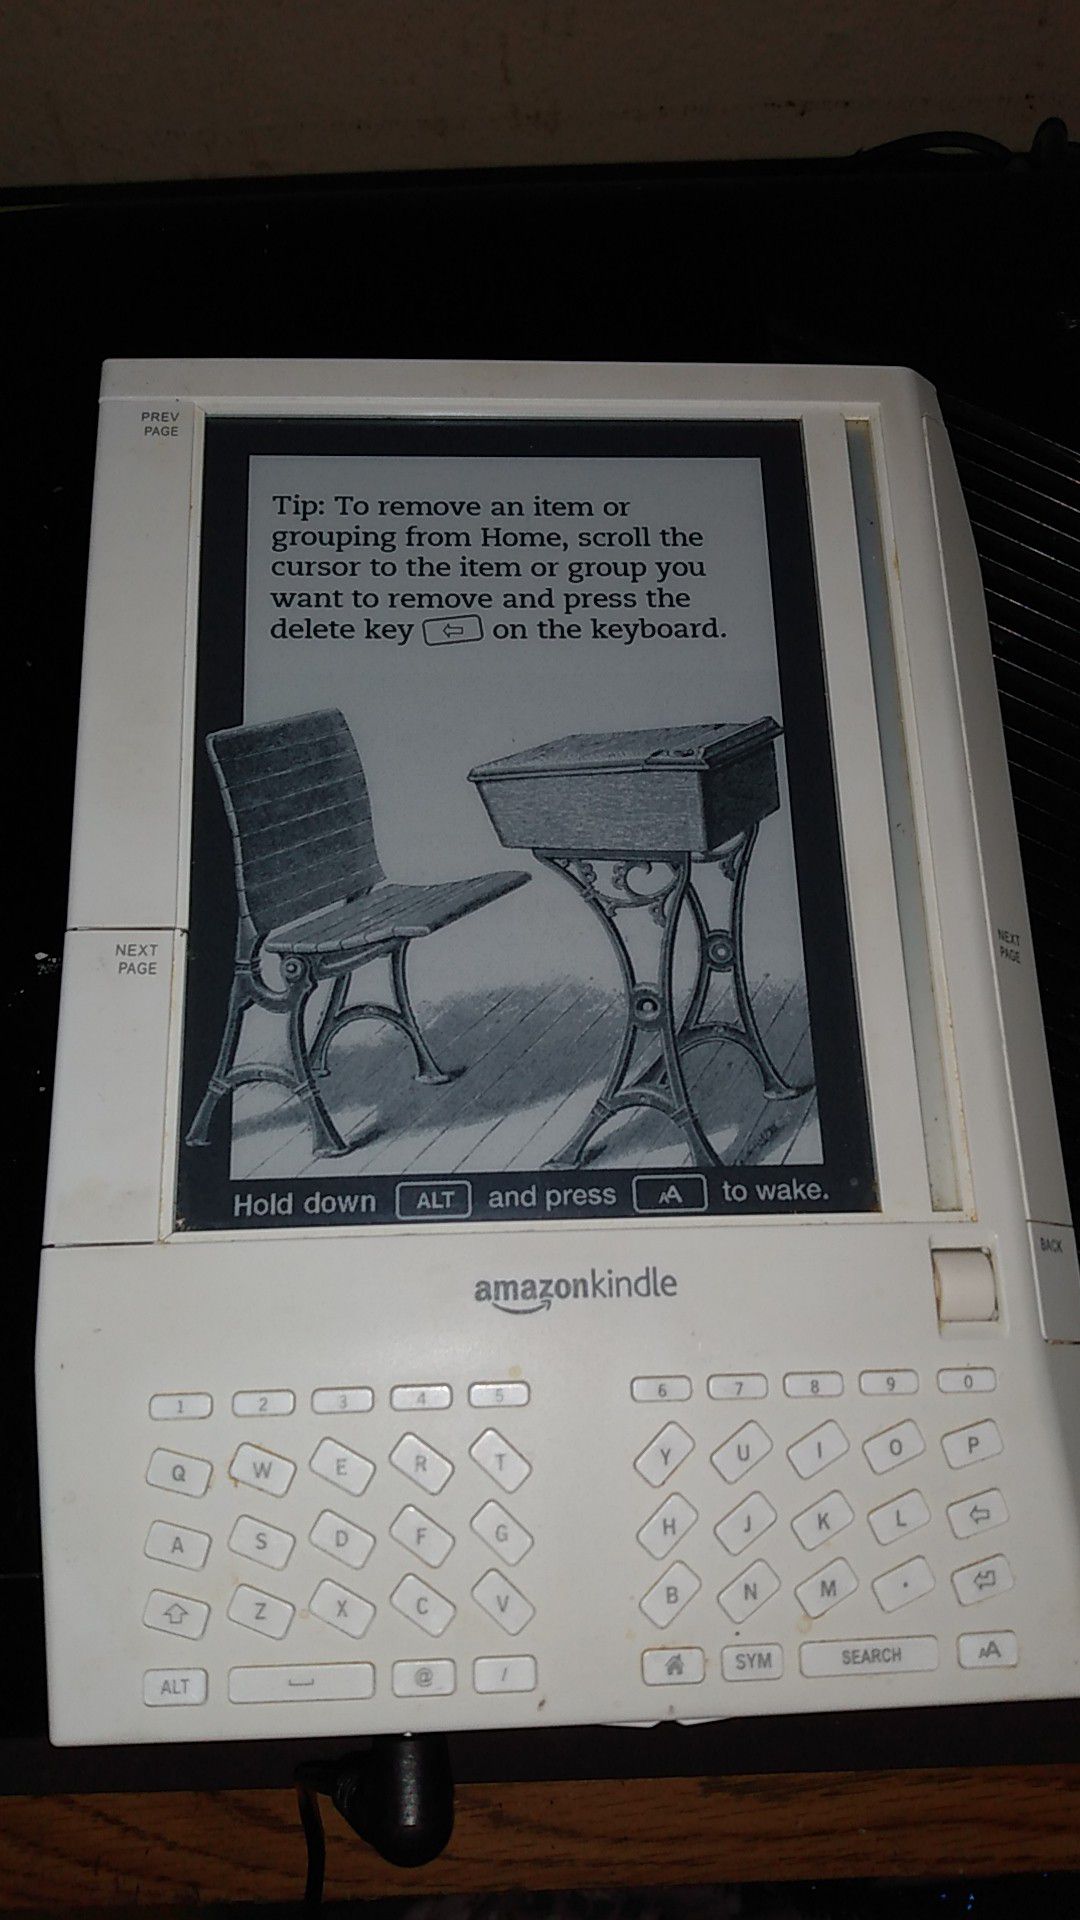 Amazon Kindle Original, 1st Generation eBook Reader